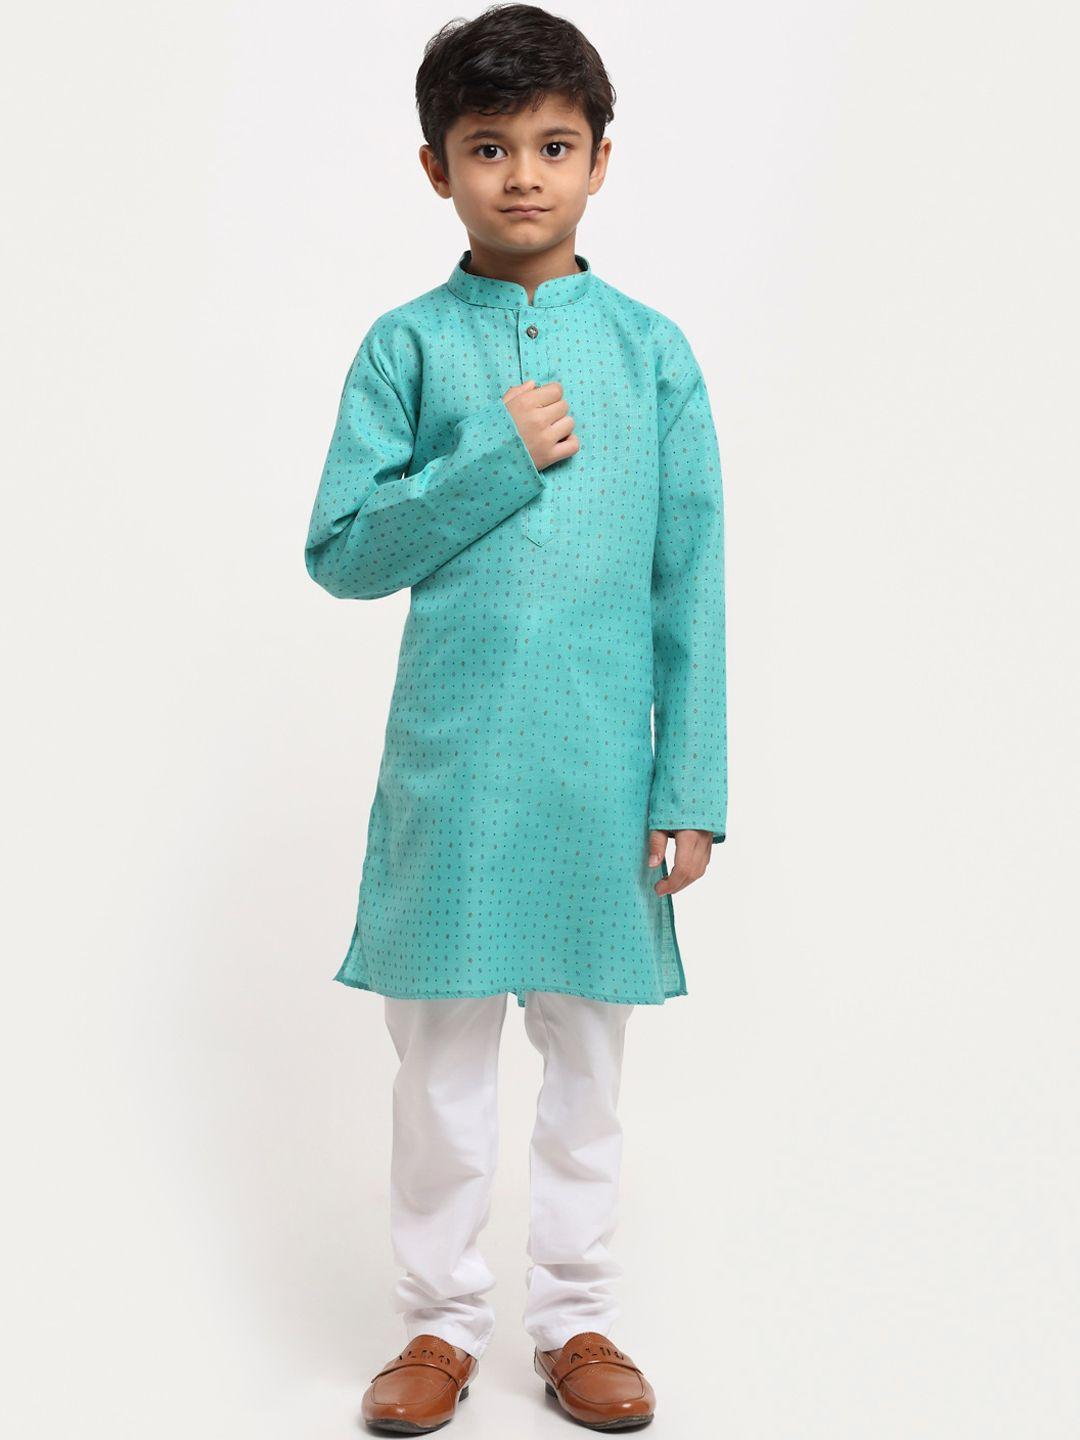 kraft india boys teal printed regular pure cotton kurta with pyjamas